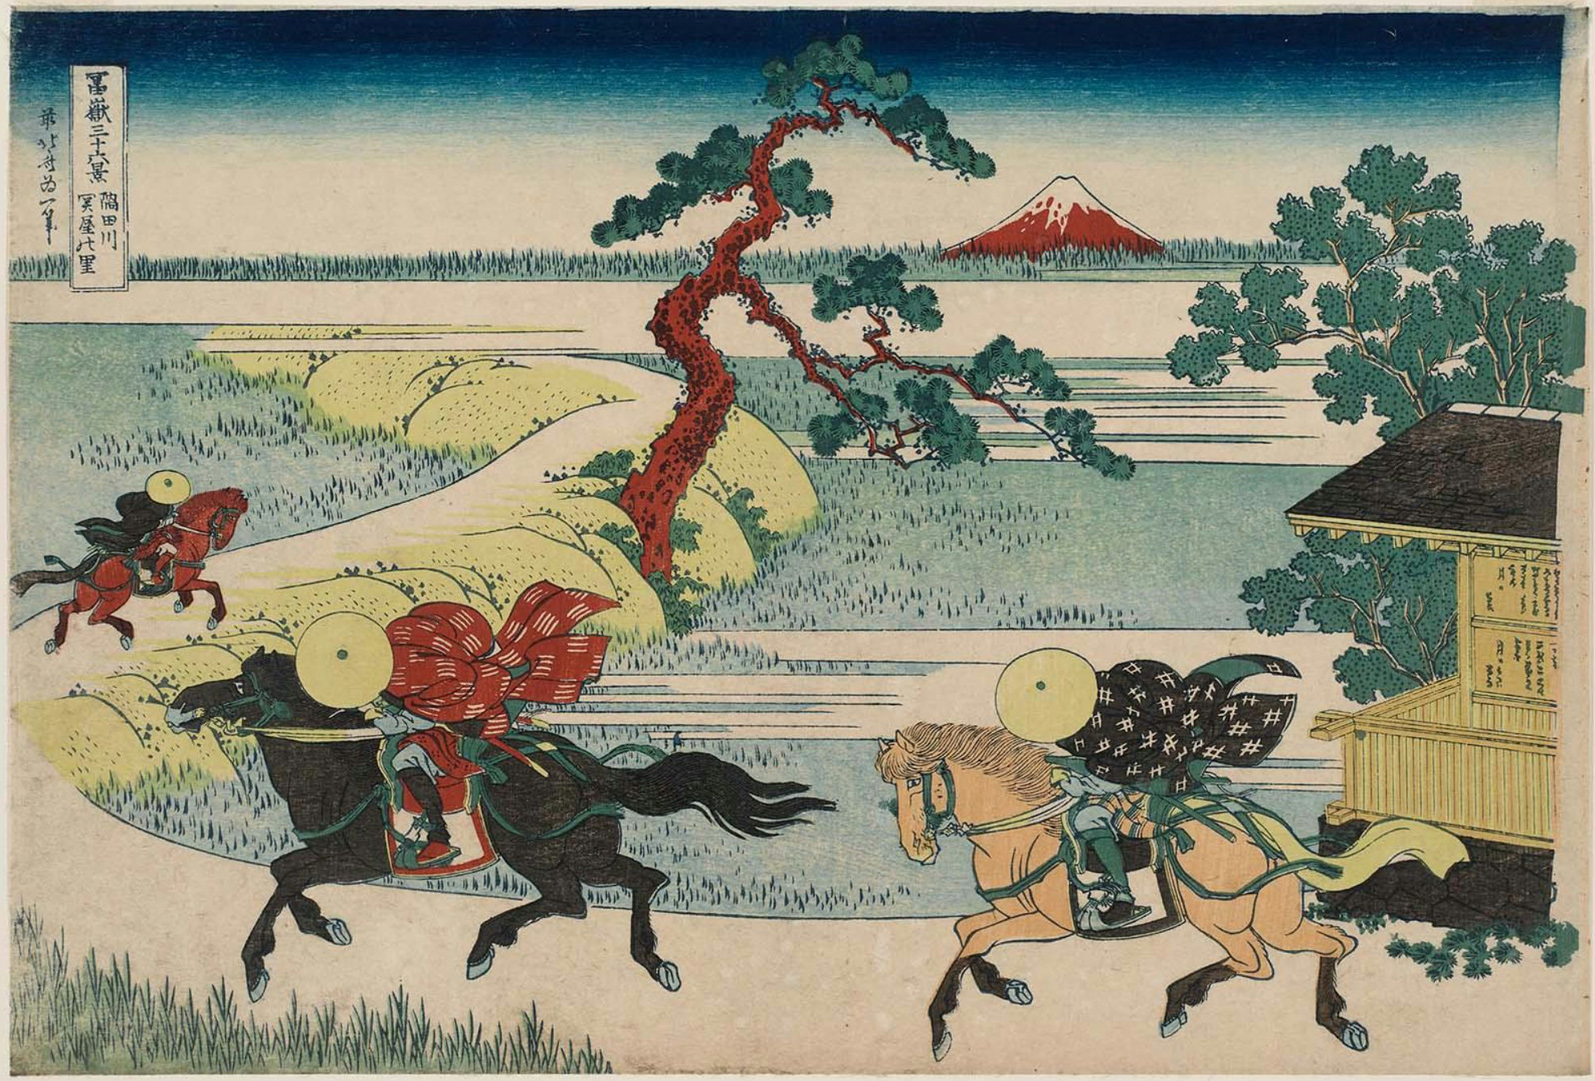 Hokusai - #32 Sekiya Village on the Sumida River - 36 Views of Mt Fuji